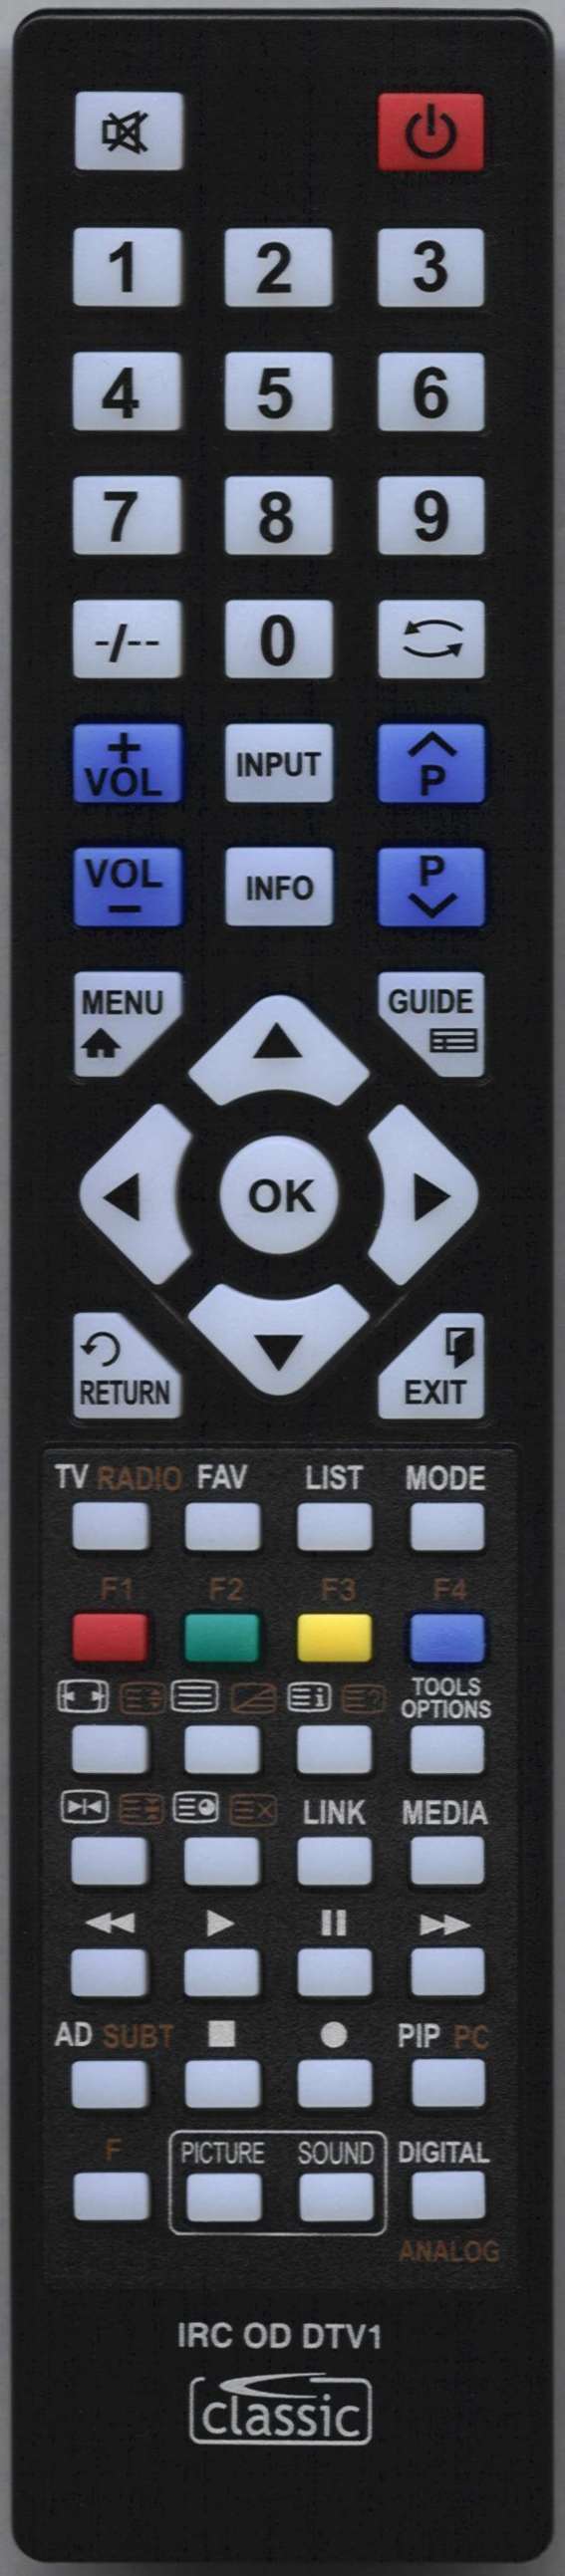 SEIKI SE32HY01UK Remote Control